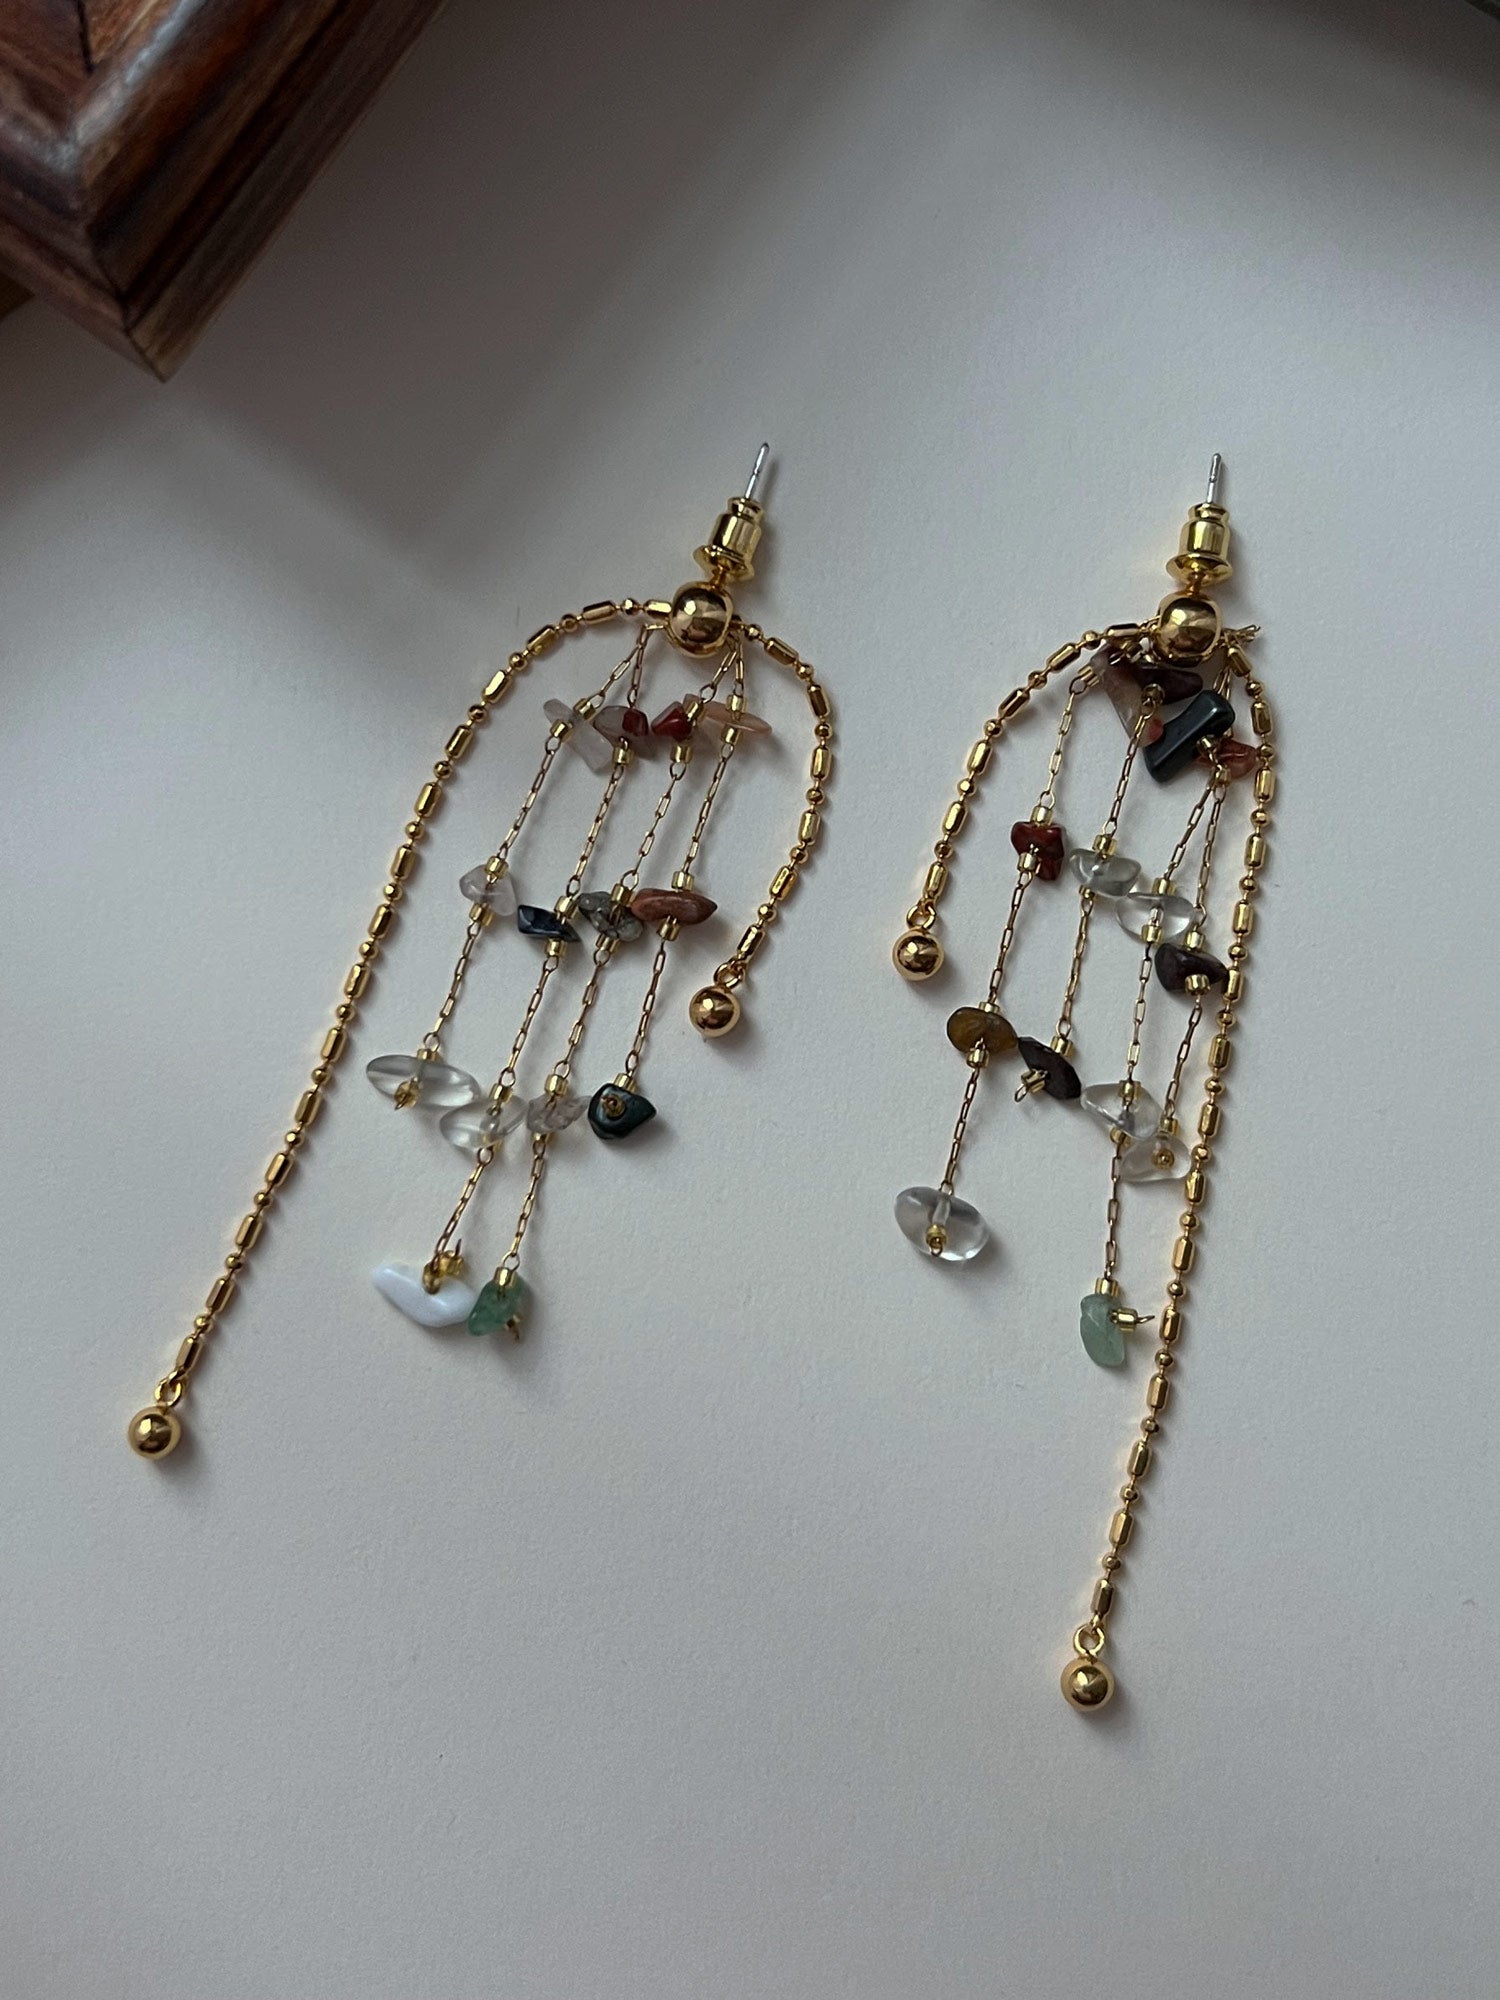 grandcircus earrings